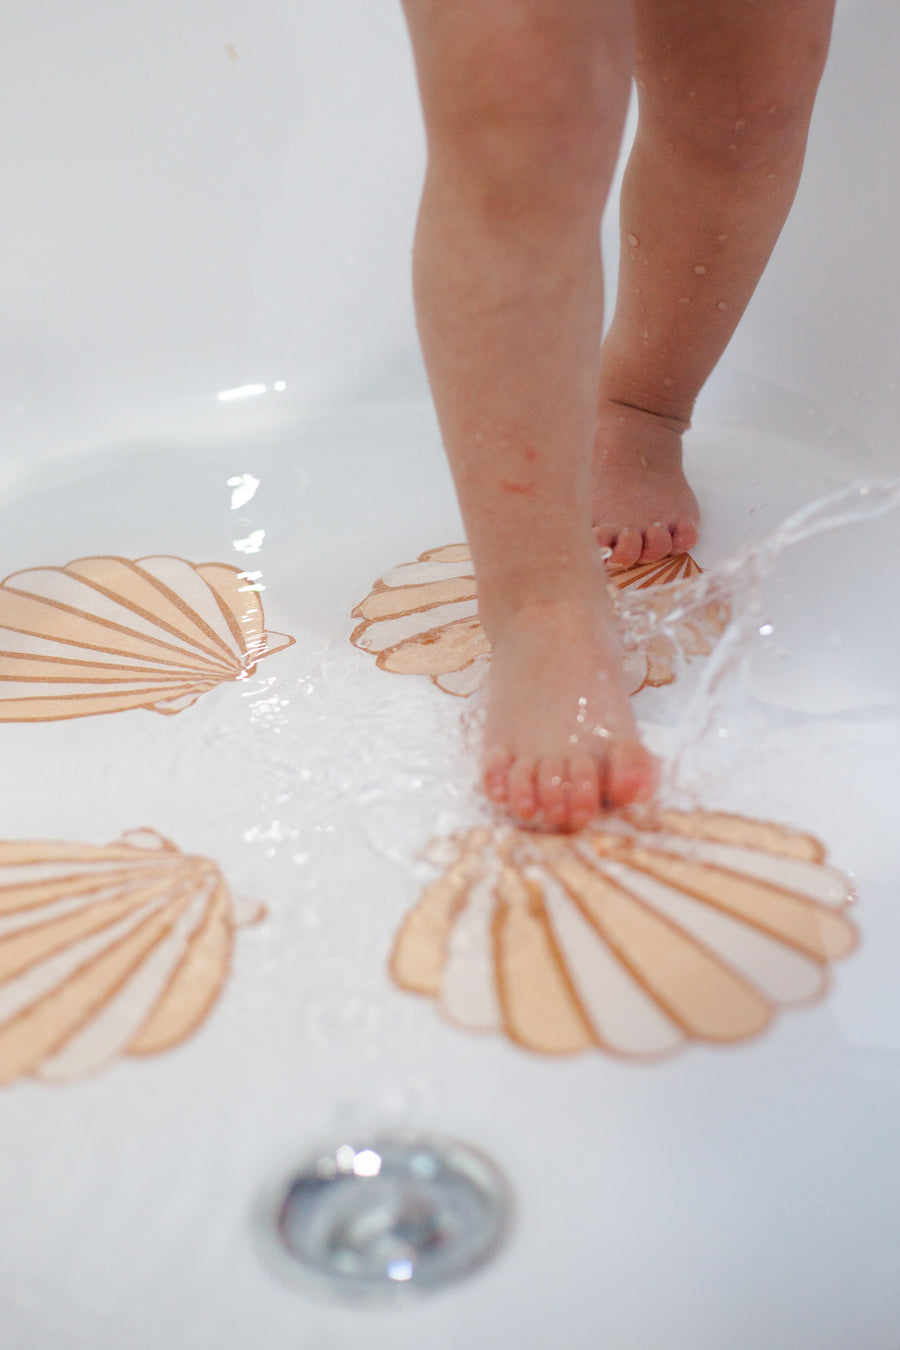 Zazi Slip-Safe Bath Spots